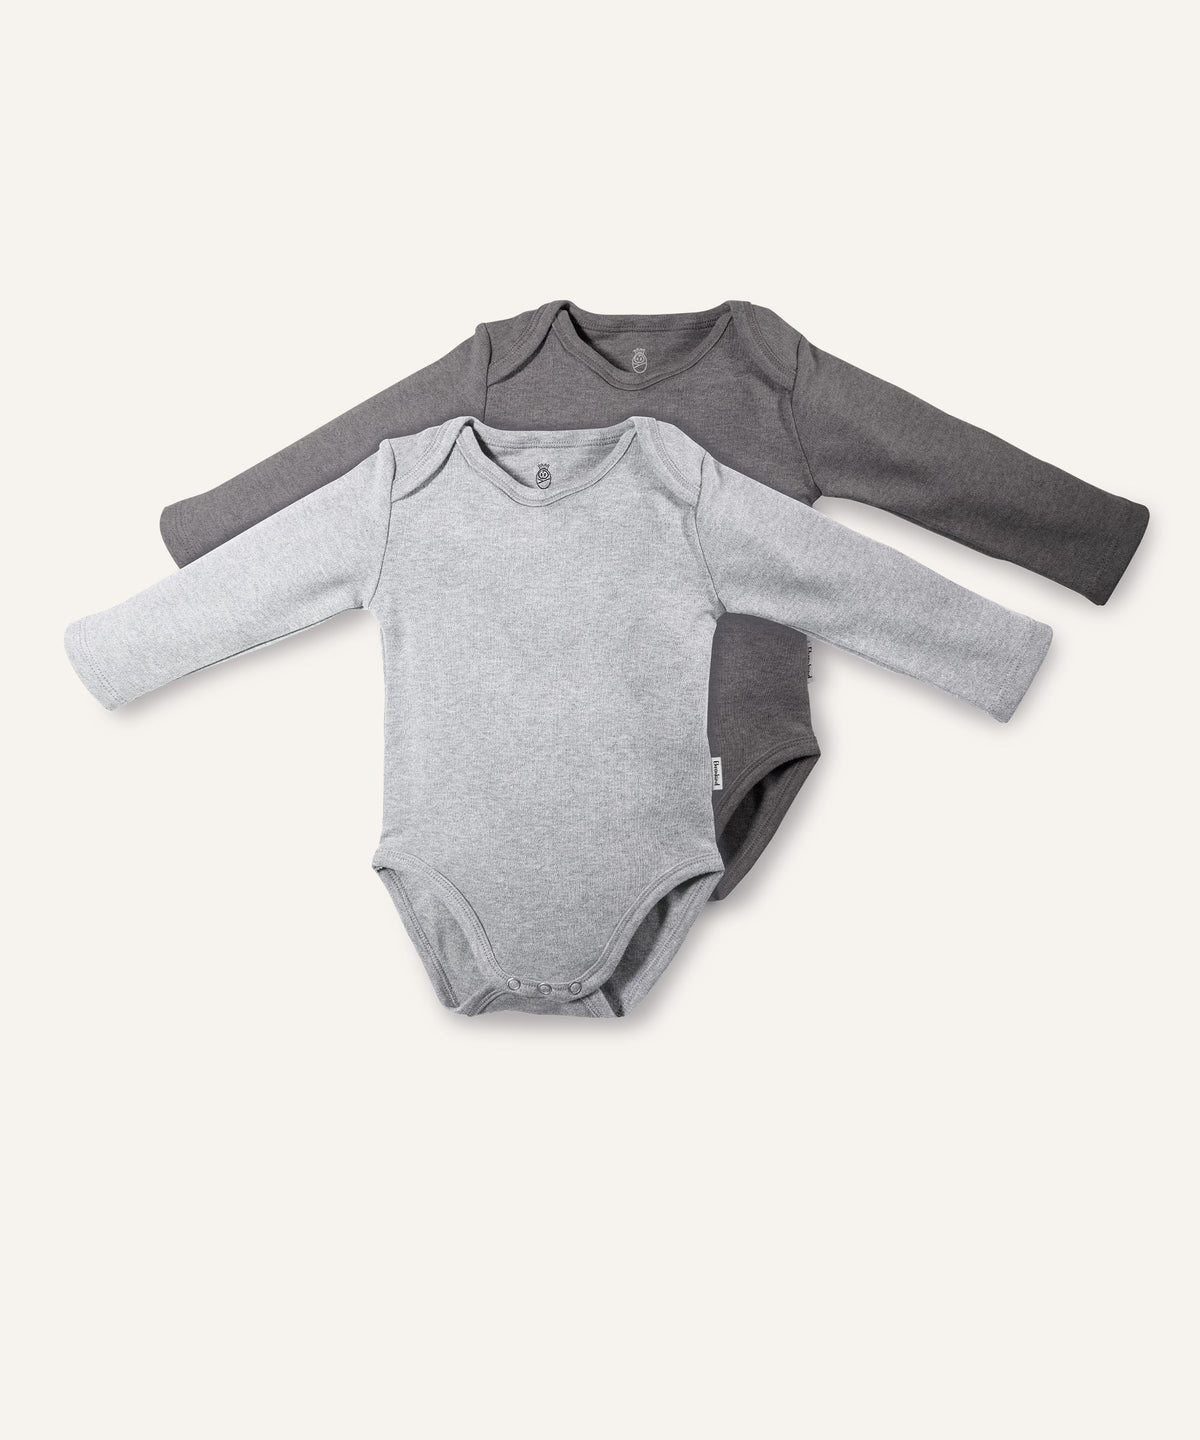 Baby Body langarm mit Auto 🚗 Langarmbody Baumwolle Blaugrün